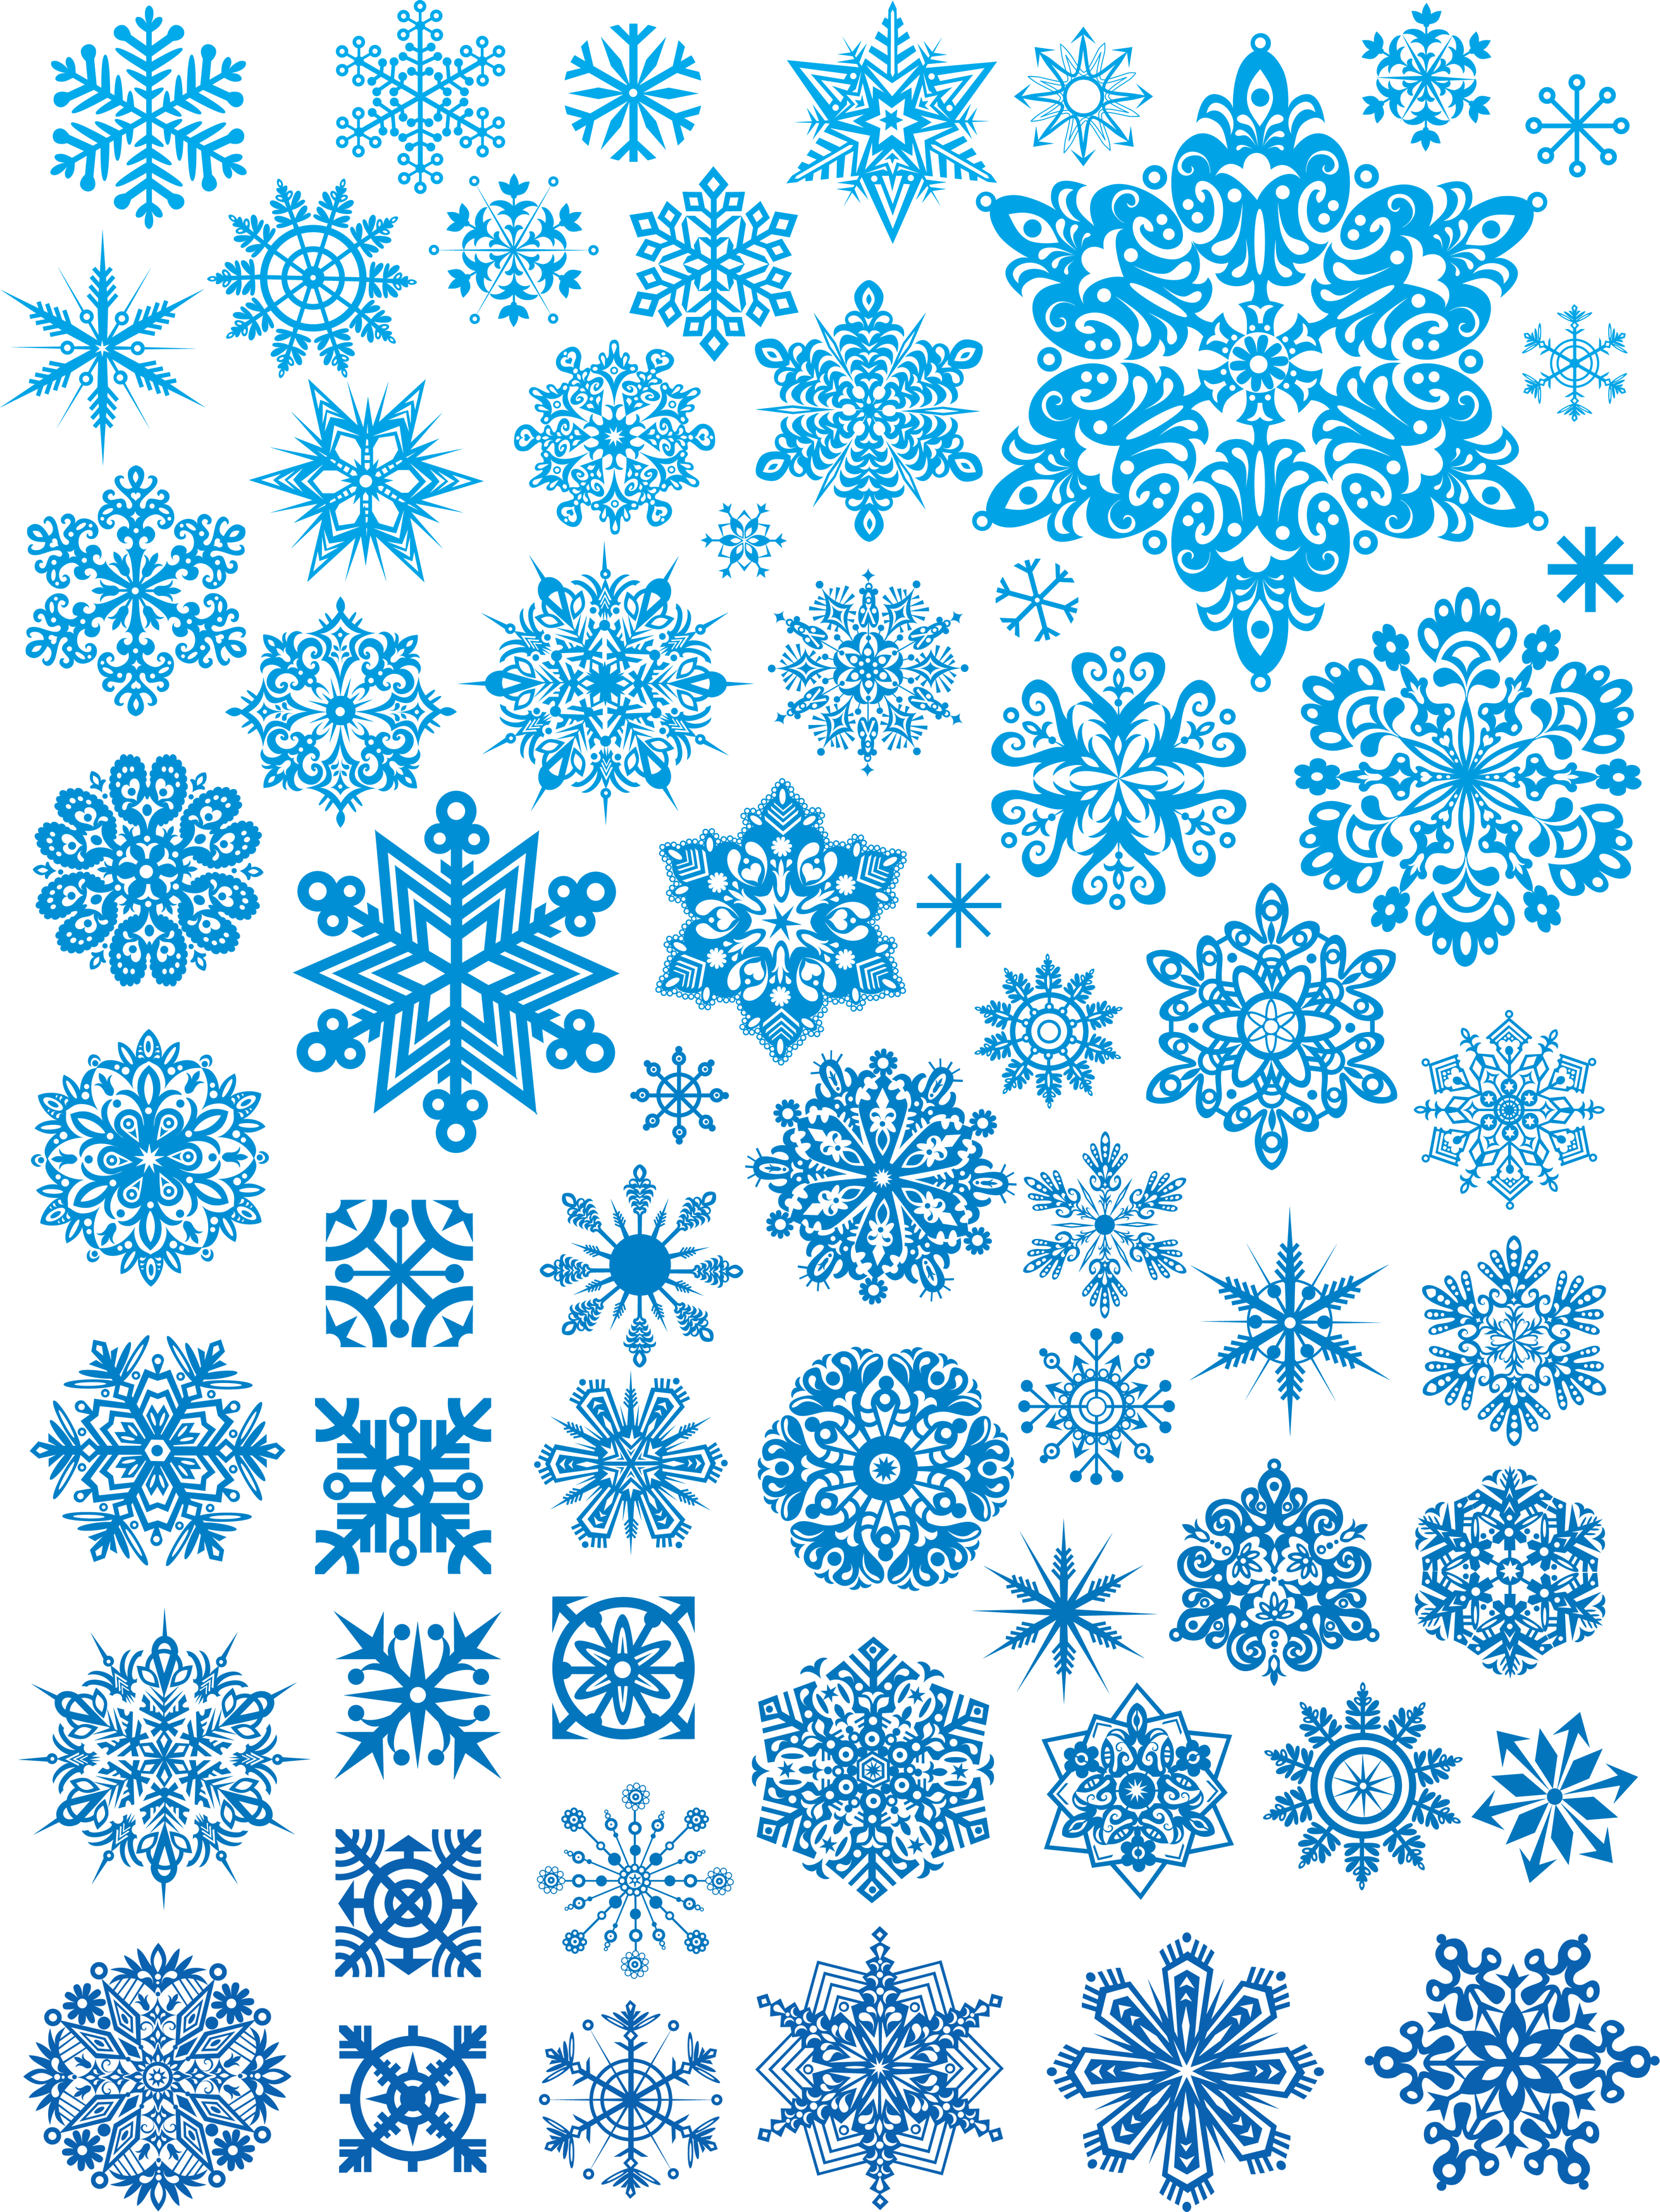 Snowflakes สีน้ำเงิน PNG ดาวน์โหลดรูปภาพ